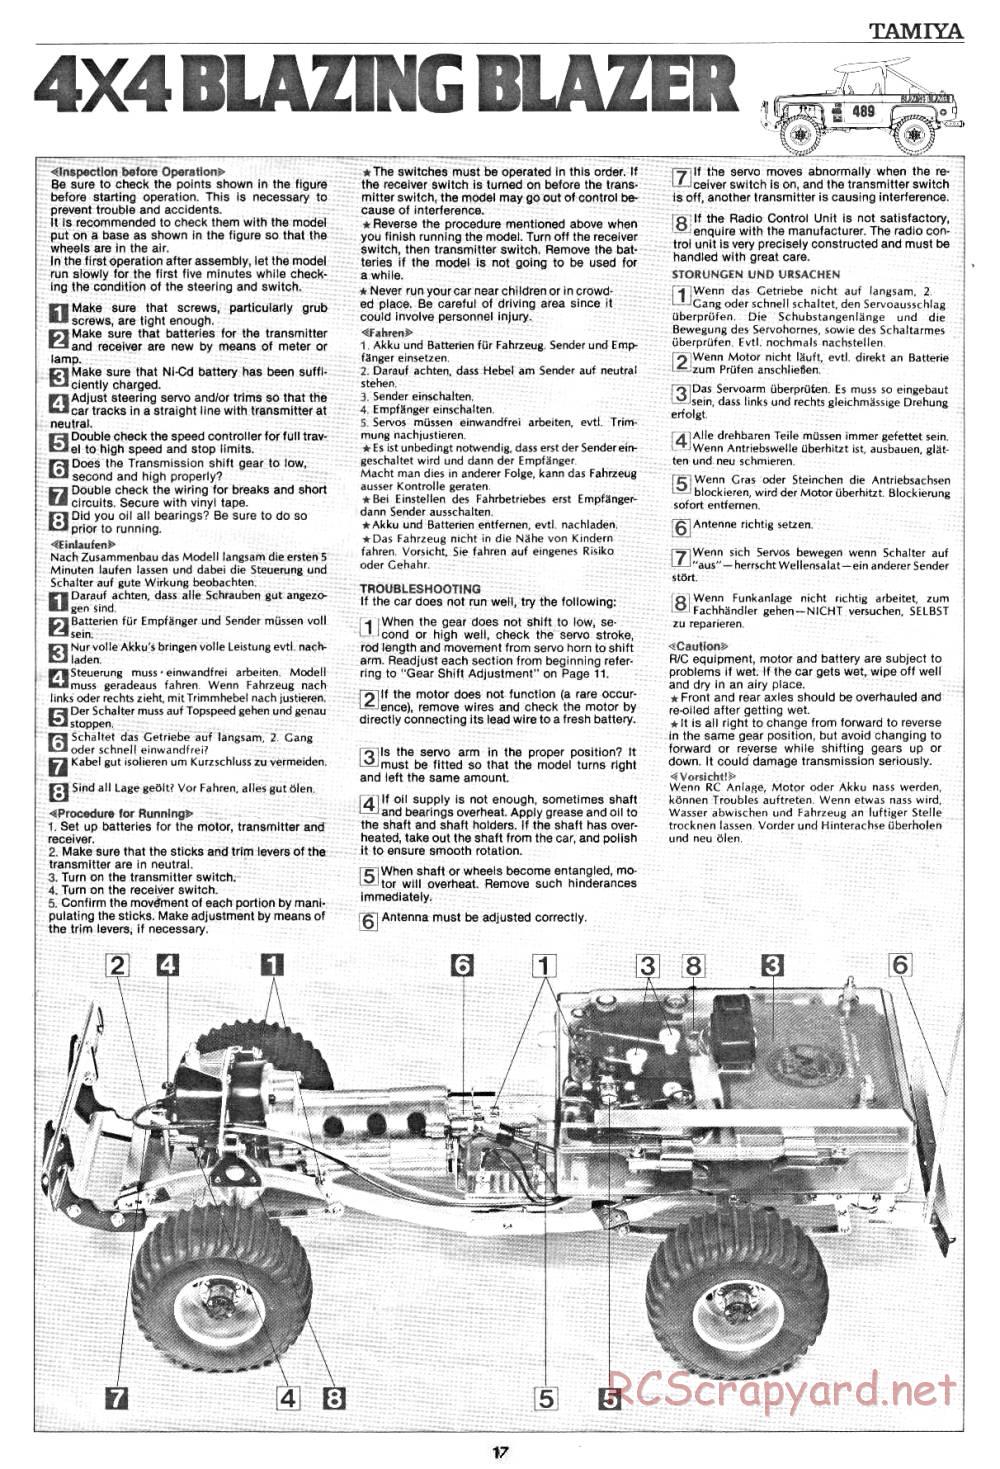 Tamiya - Blazing Blazer - 58029 - Manual - Page 17